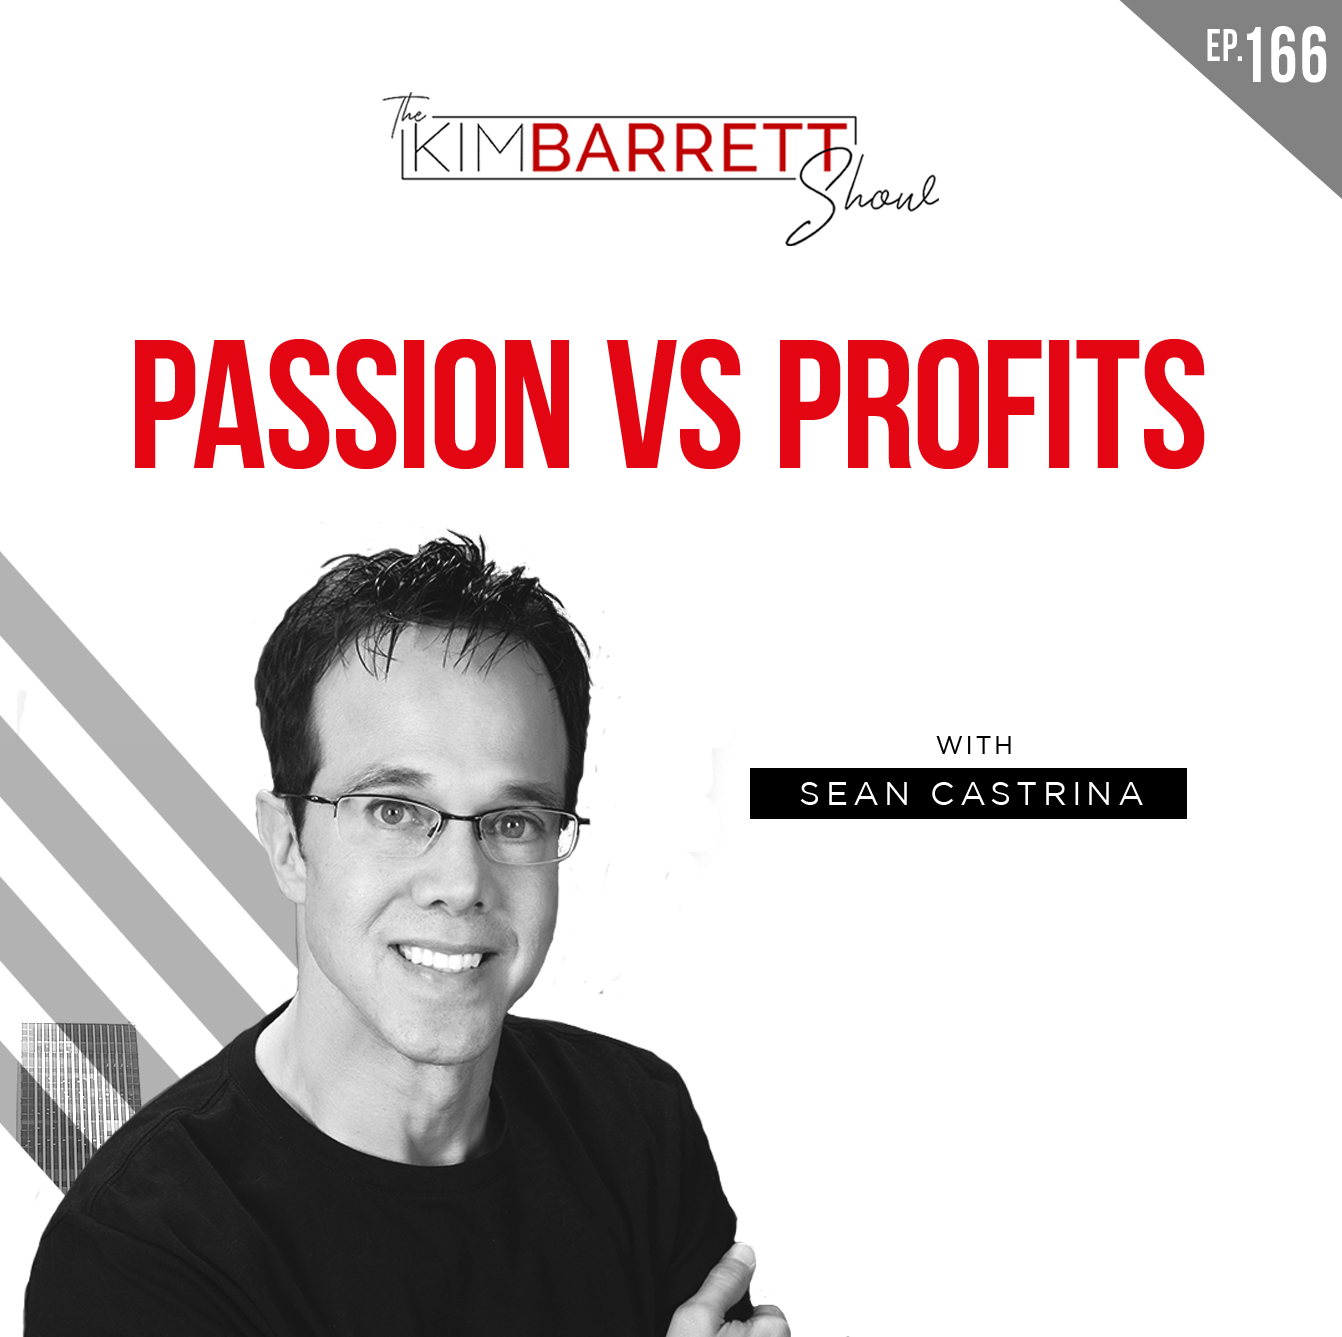 Passion vs Profits with Sean Castrina